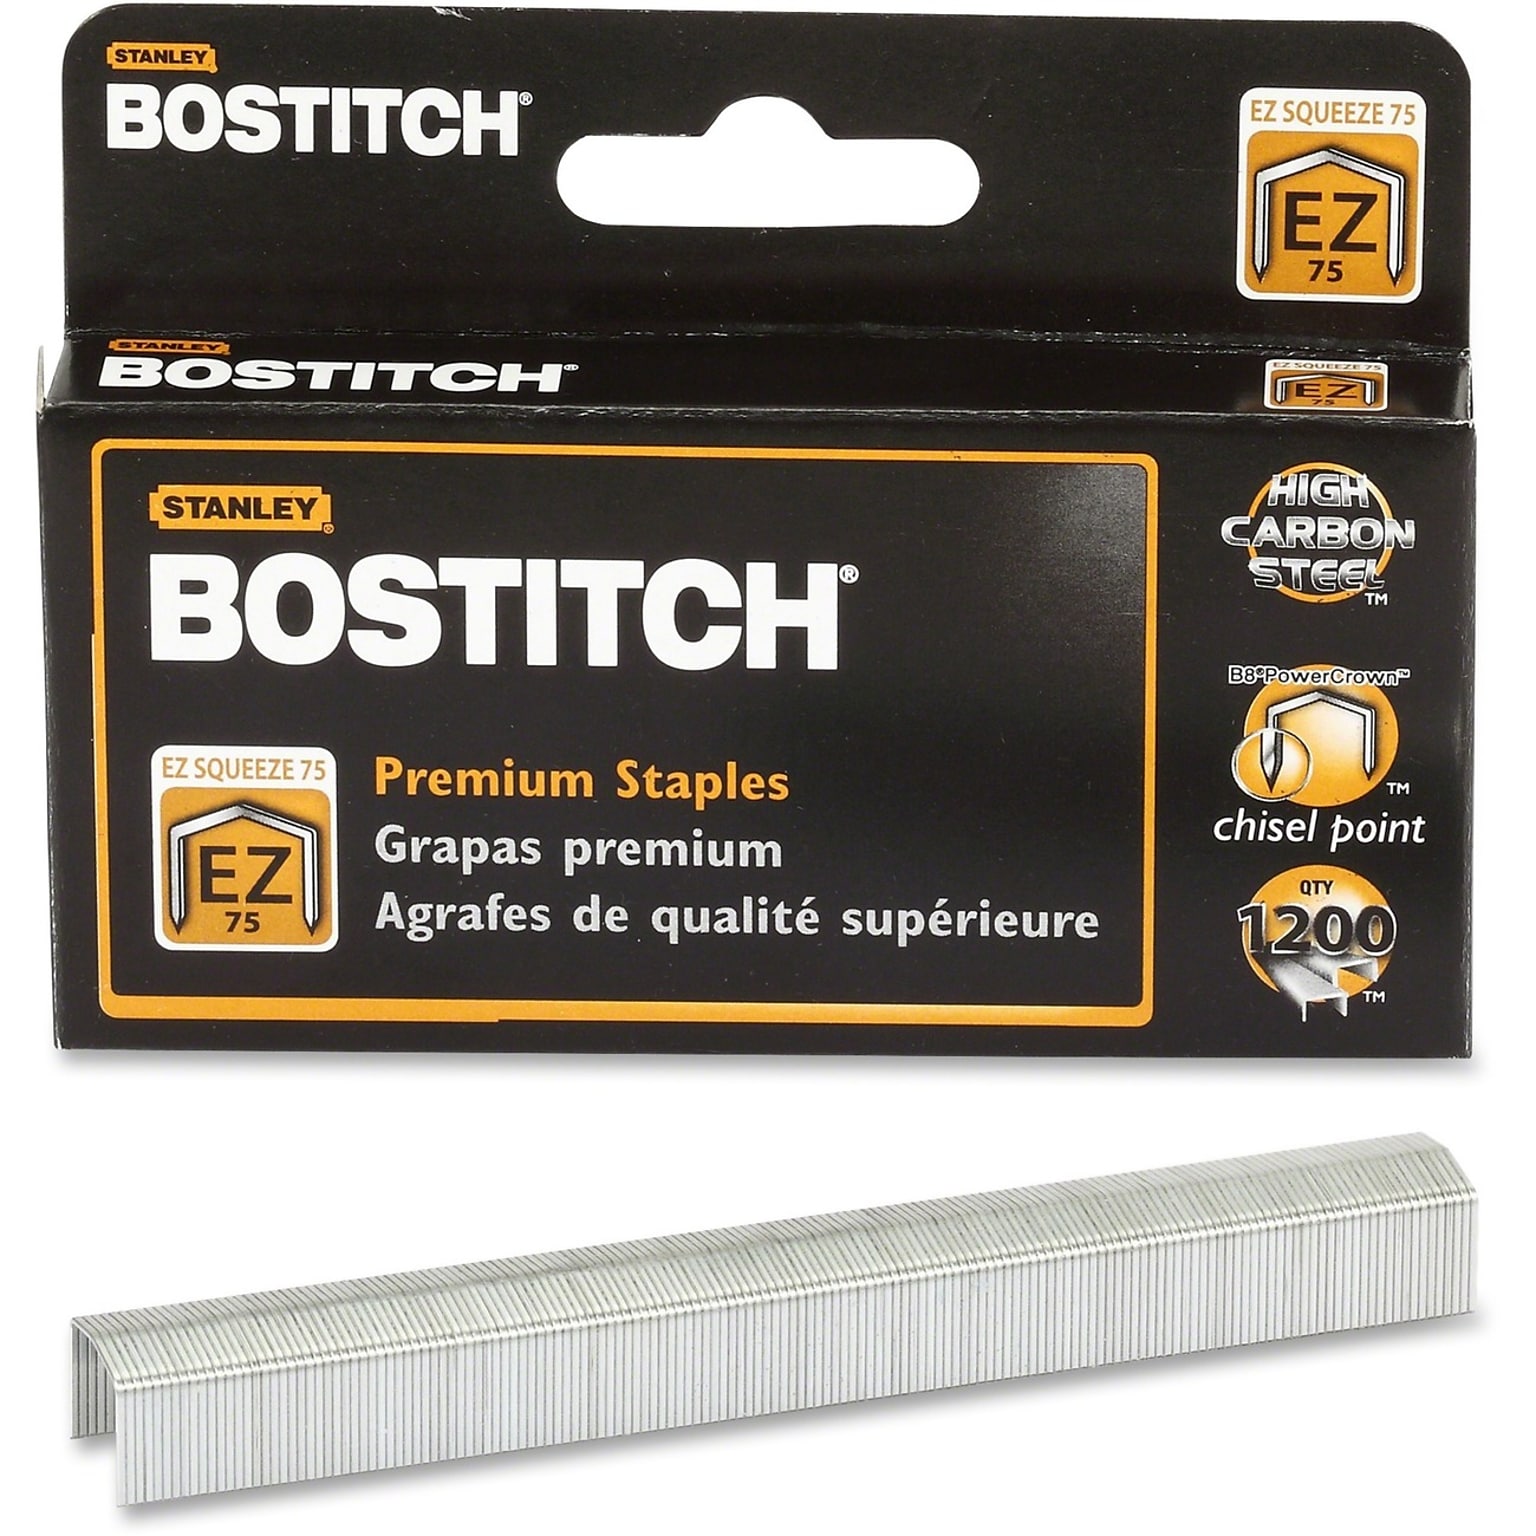 Bostitch B8 PowerCrown EZ Squeeze 75 Staples for B875 Staplers, 1,200/Box (STCR75XHC)